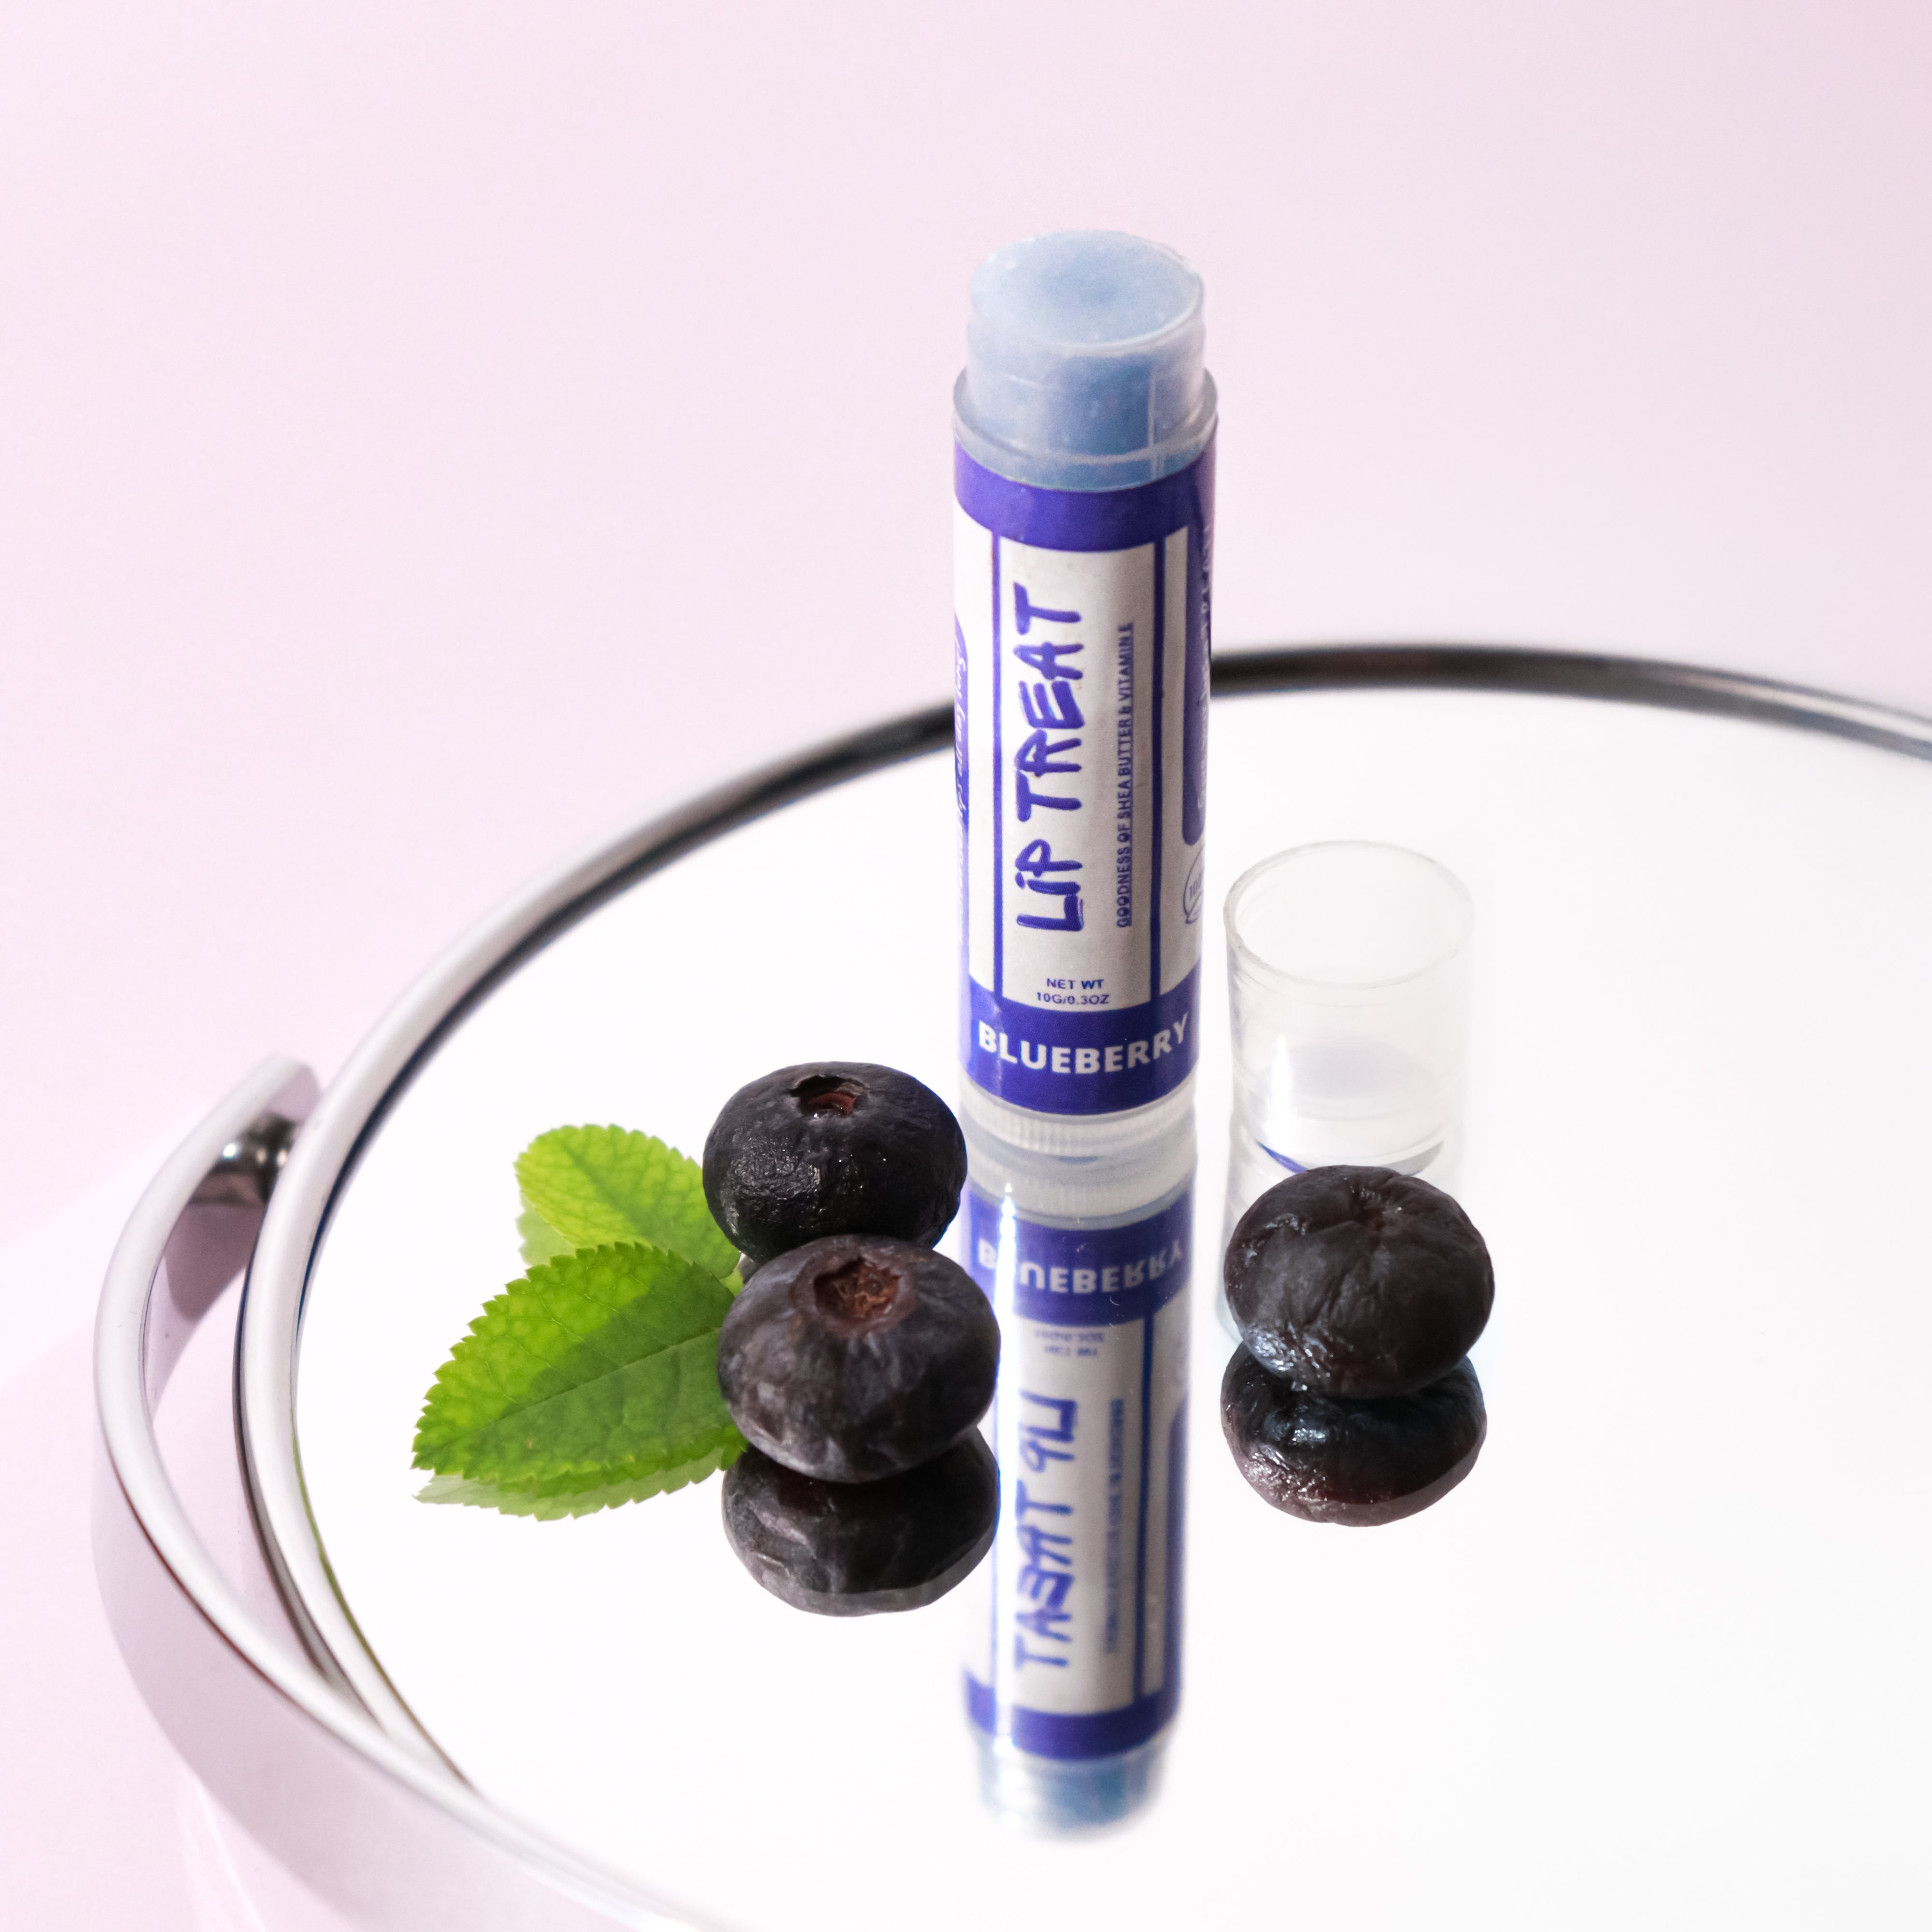 Blueberry lip scrub + lip balm combo